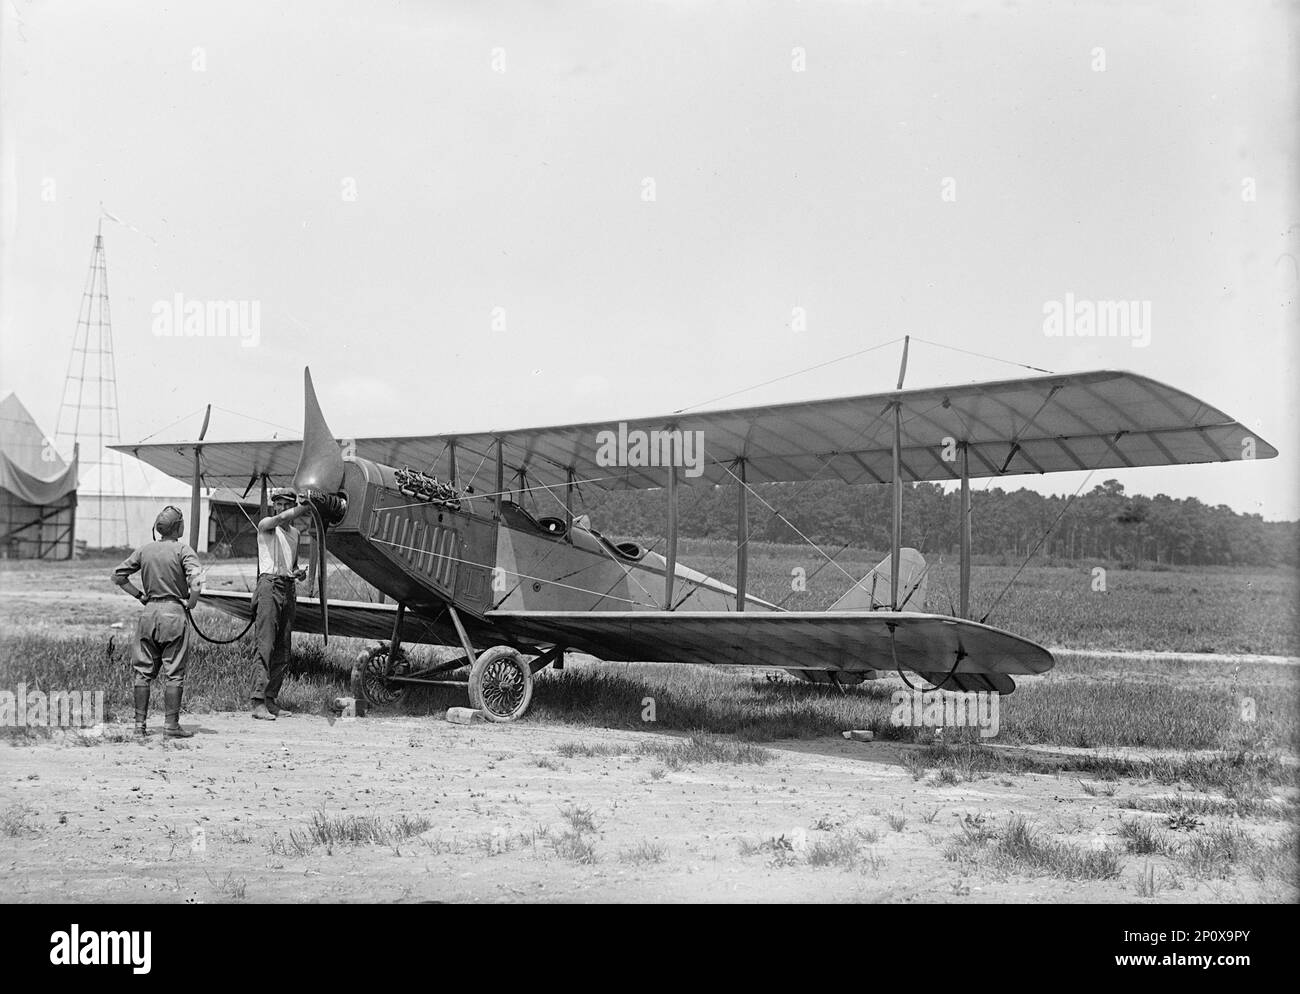 Langley Field, Virginia - Curtis Jn4D Flugzeug, mit Olmstead Propeller und Ackerman Wheels, 1917. Stockfoto